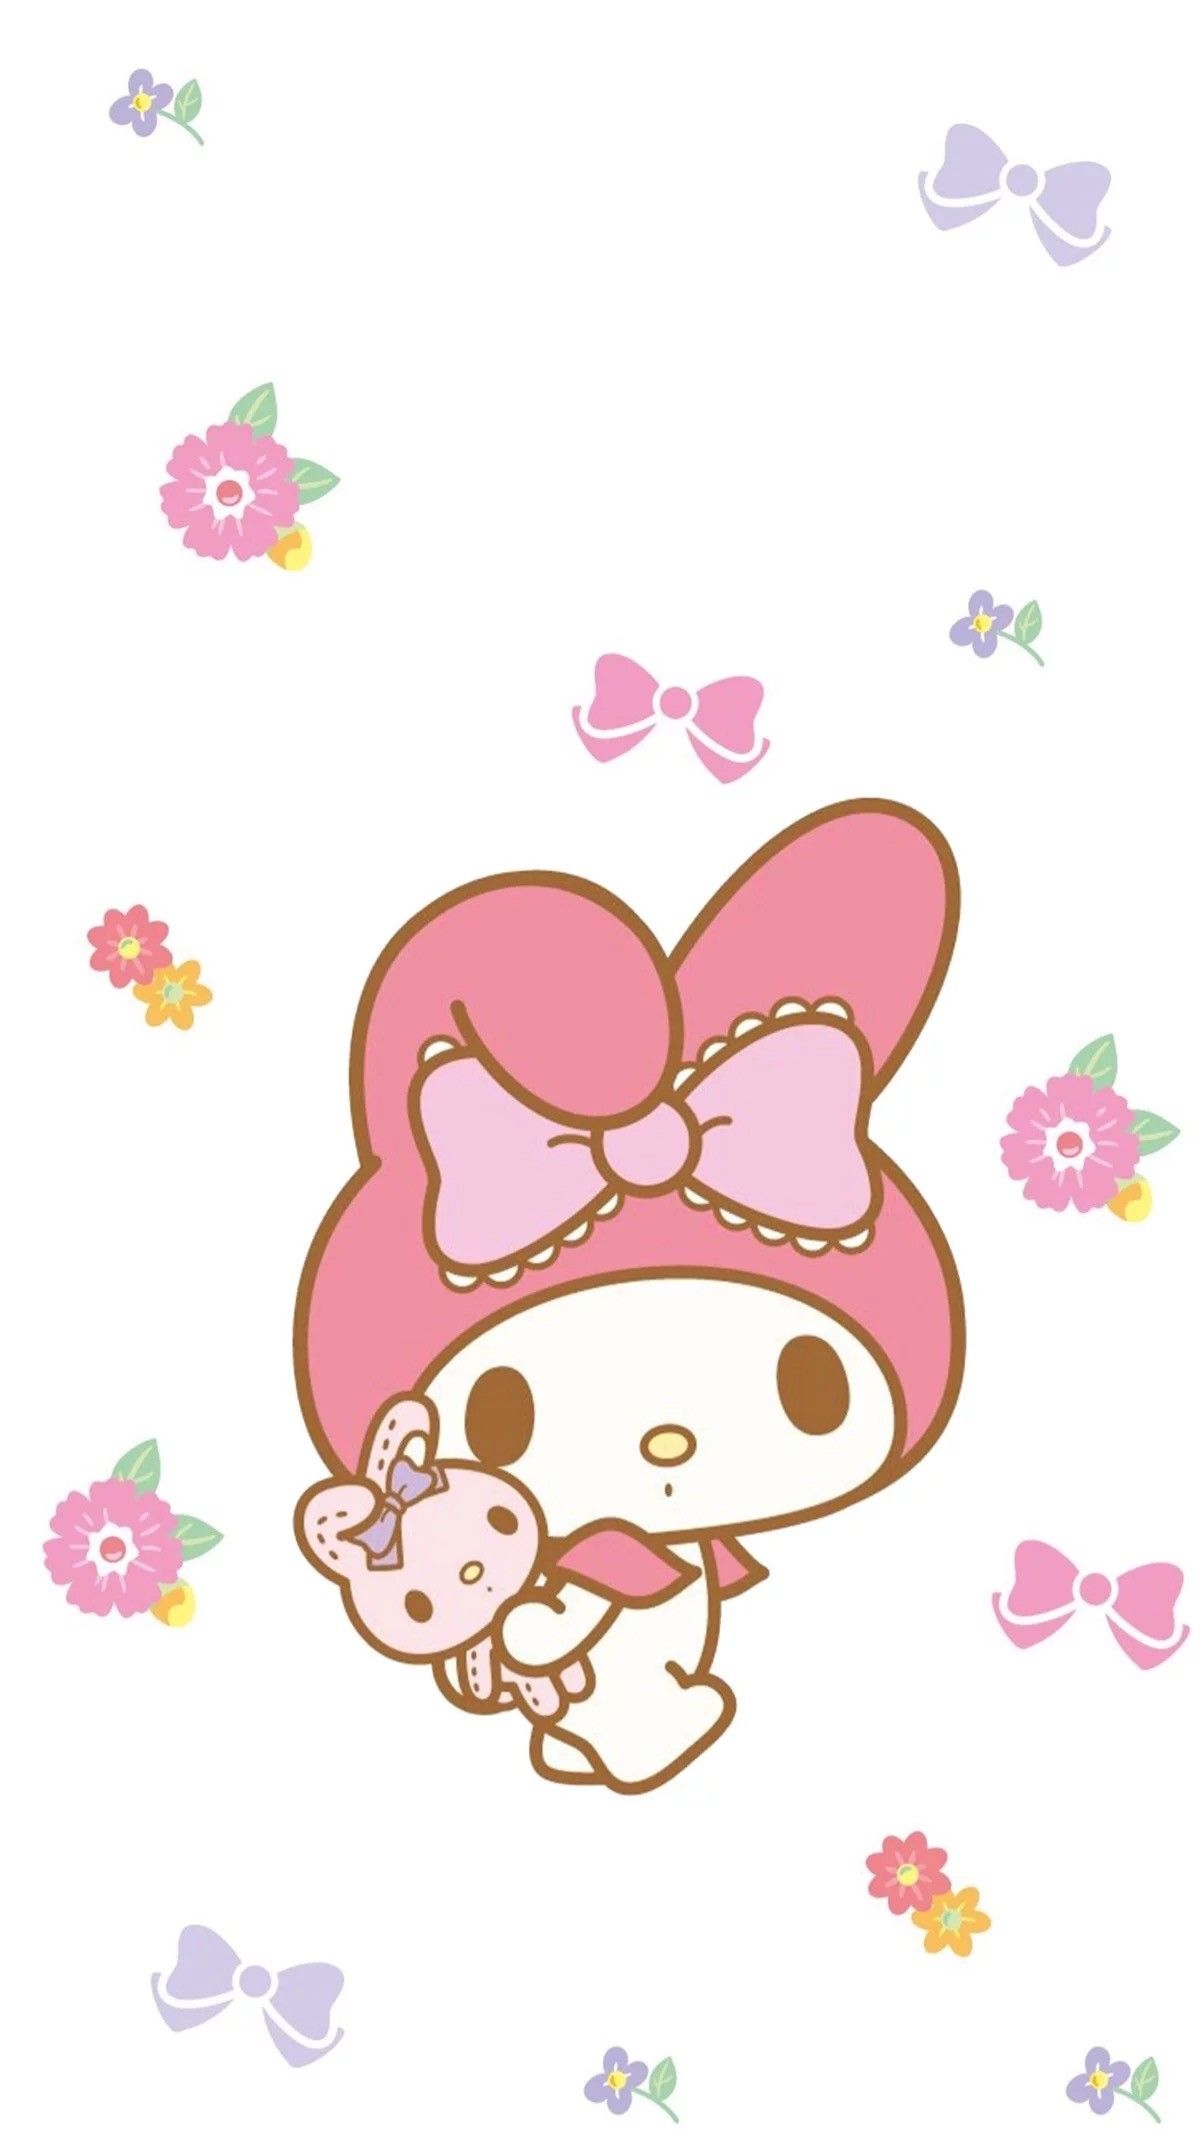 Sanrio Wallpaper, iPhone Wallpaper, Hello Kitty, Twins, Printing, Sticker, Stationery, Kawaii, Screen